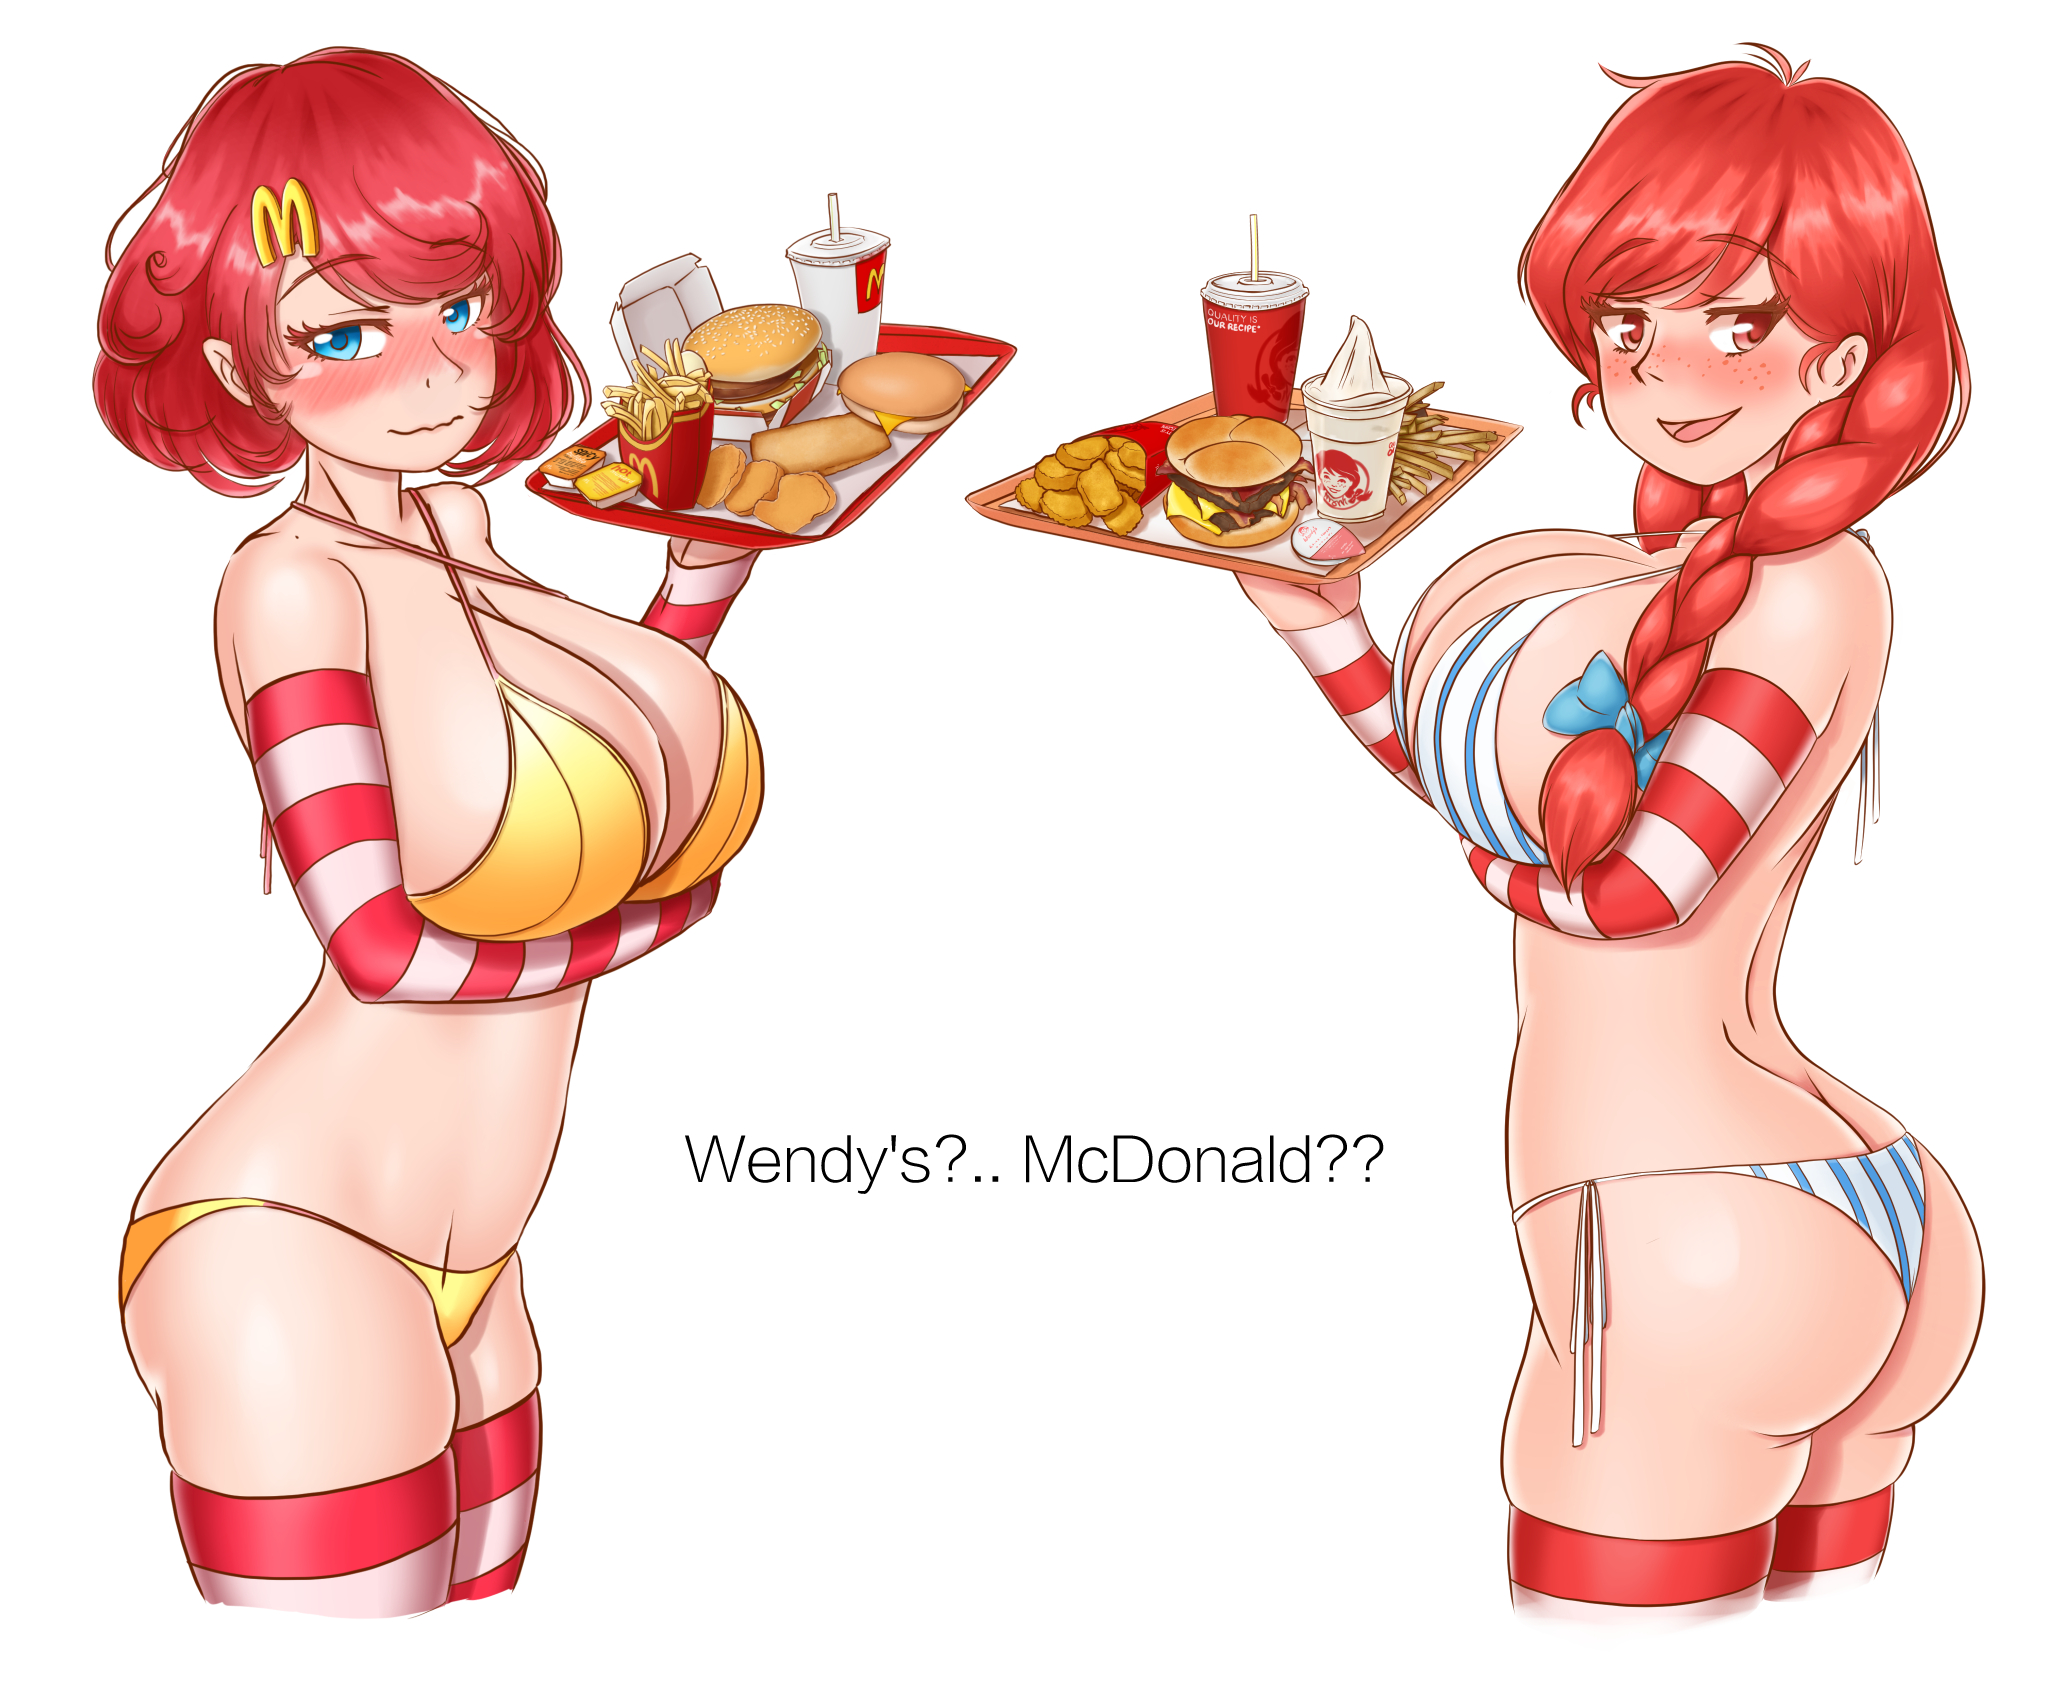 McDonalds or Wendy’s?